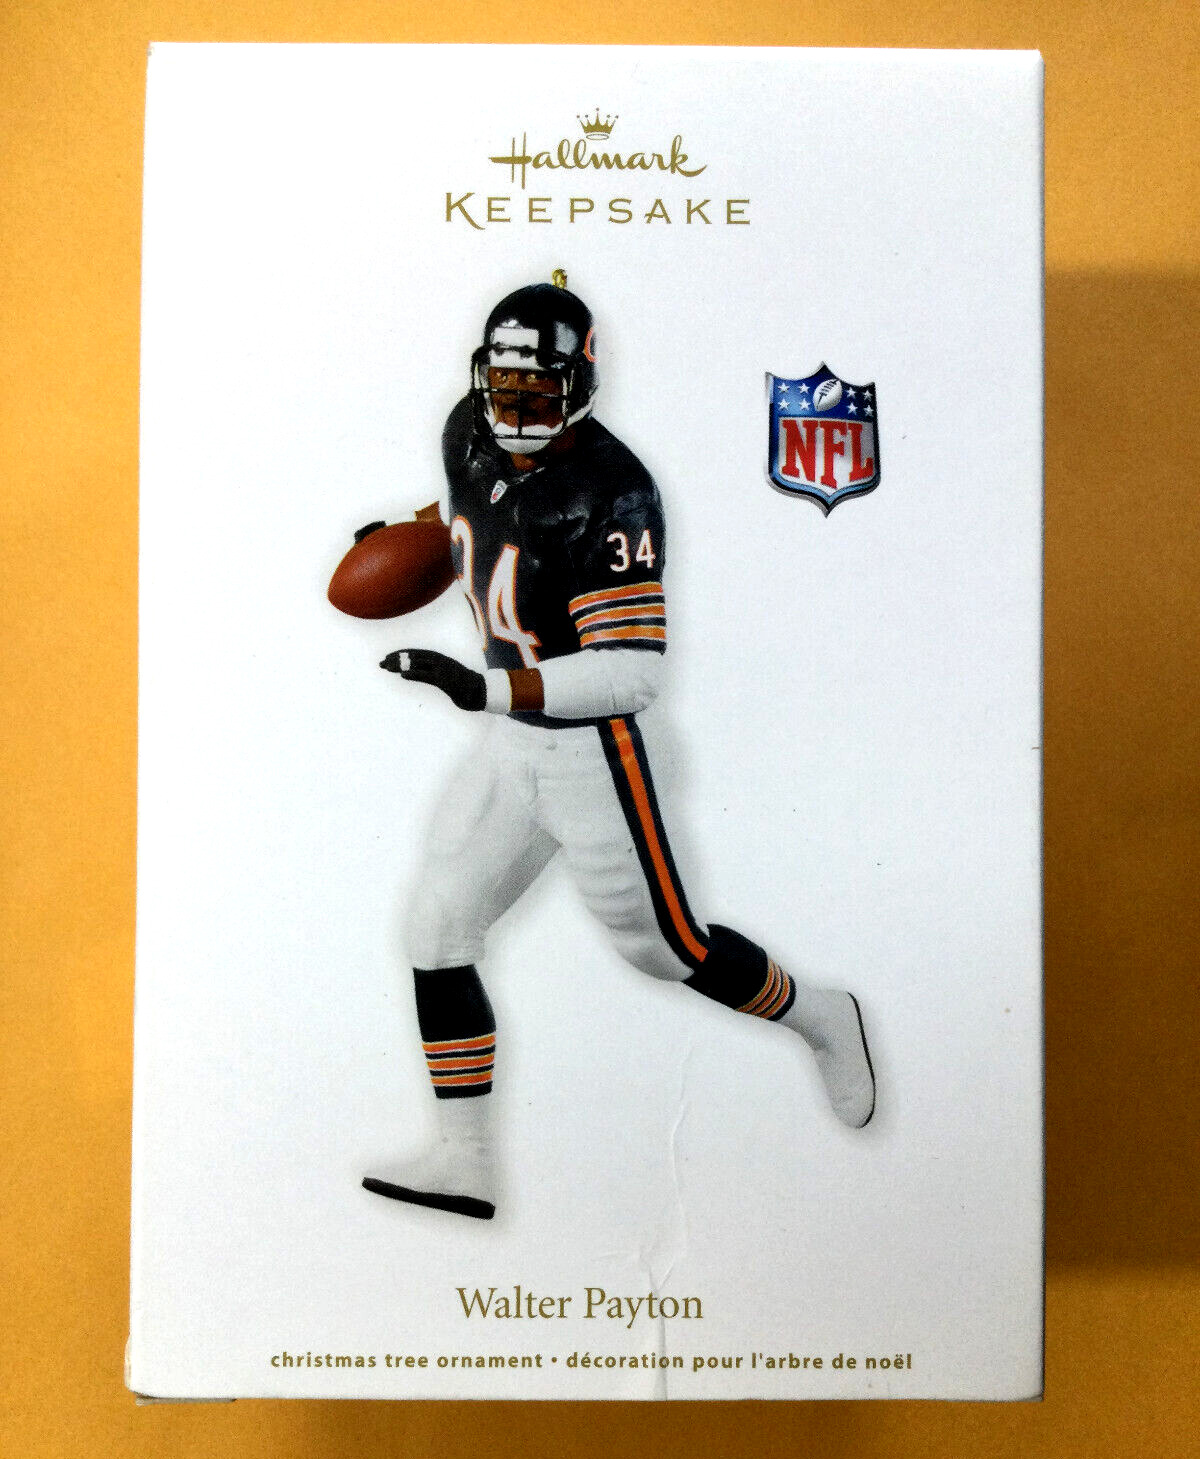 WALTER PAYTON,SWEETNESS,NFL,CHICAGO BEARS,Yr 2012 Hallmark Keepsake